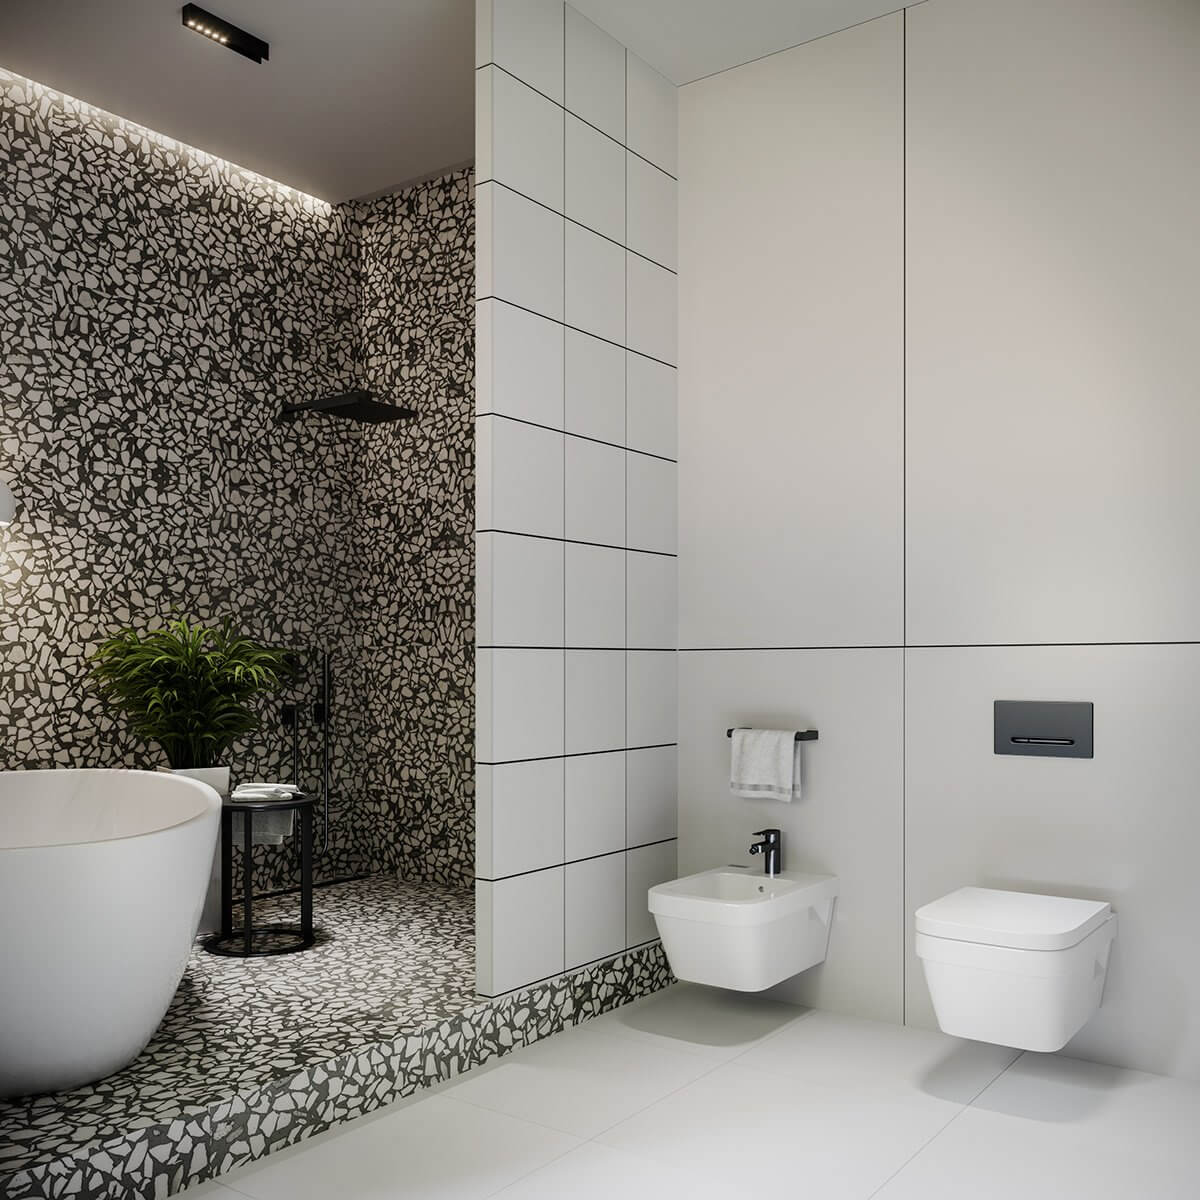 Zalomowa house bathroom shower wc - cgi visualization